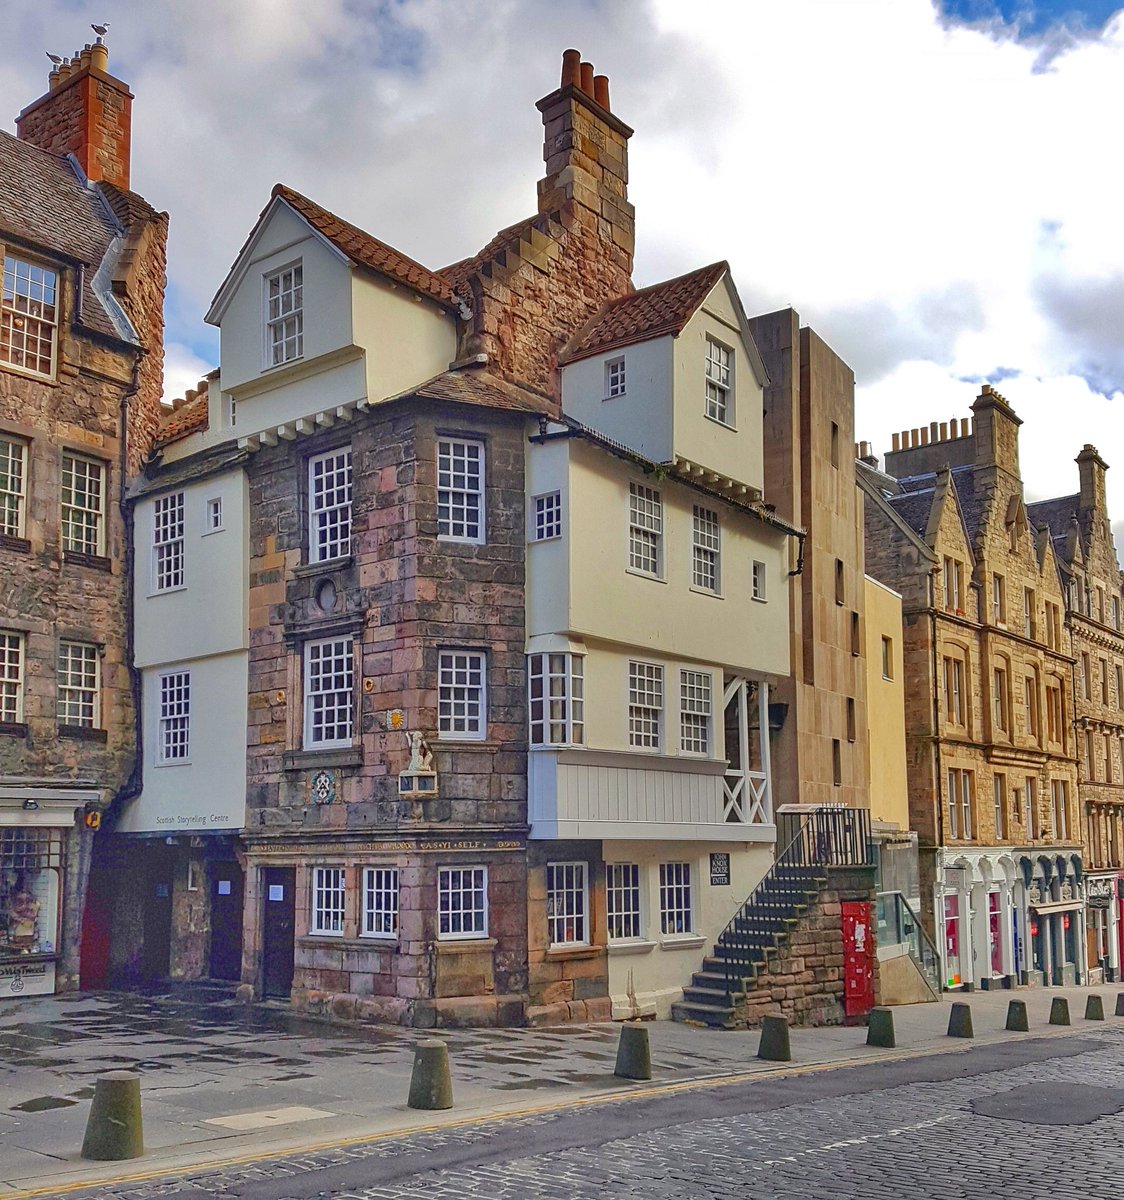 Beautiful John Knox house in Edinburgh's old town 💕

#Edinburgh #Scotland #visitscotland #Scotlandisnow #scottish #Uk #britian #outdoor #architecture #scottishstorytellingcentre #royalmile #oldtownedinburgh #edinburghfestival #EdinburghSnapshots #
#edinburghcity  #johnknoxhouse